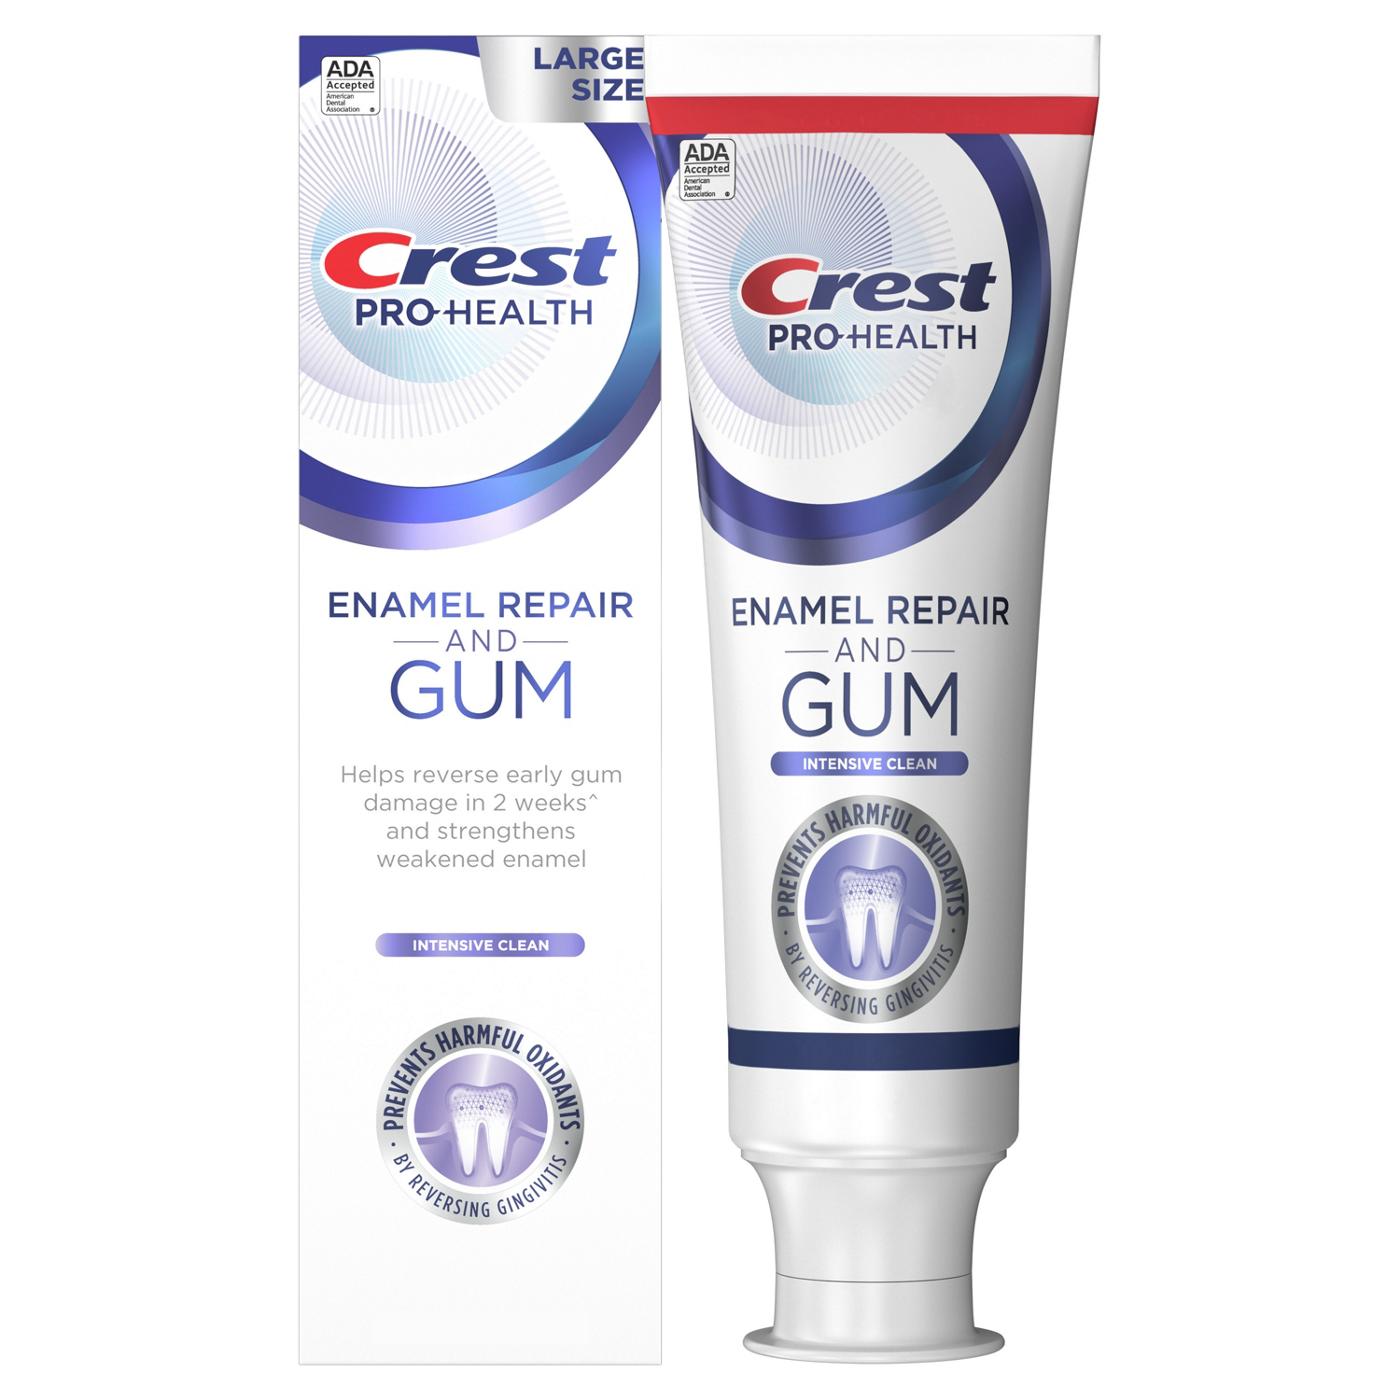 Crest Pro Health Enamel Repair & Gum Toothpaste - Intensive Clean; image 5 of 8